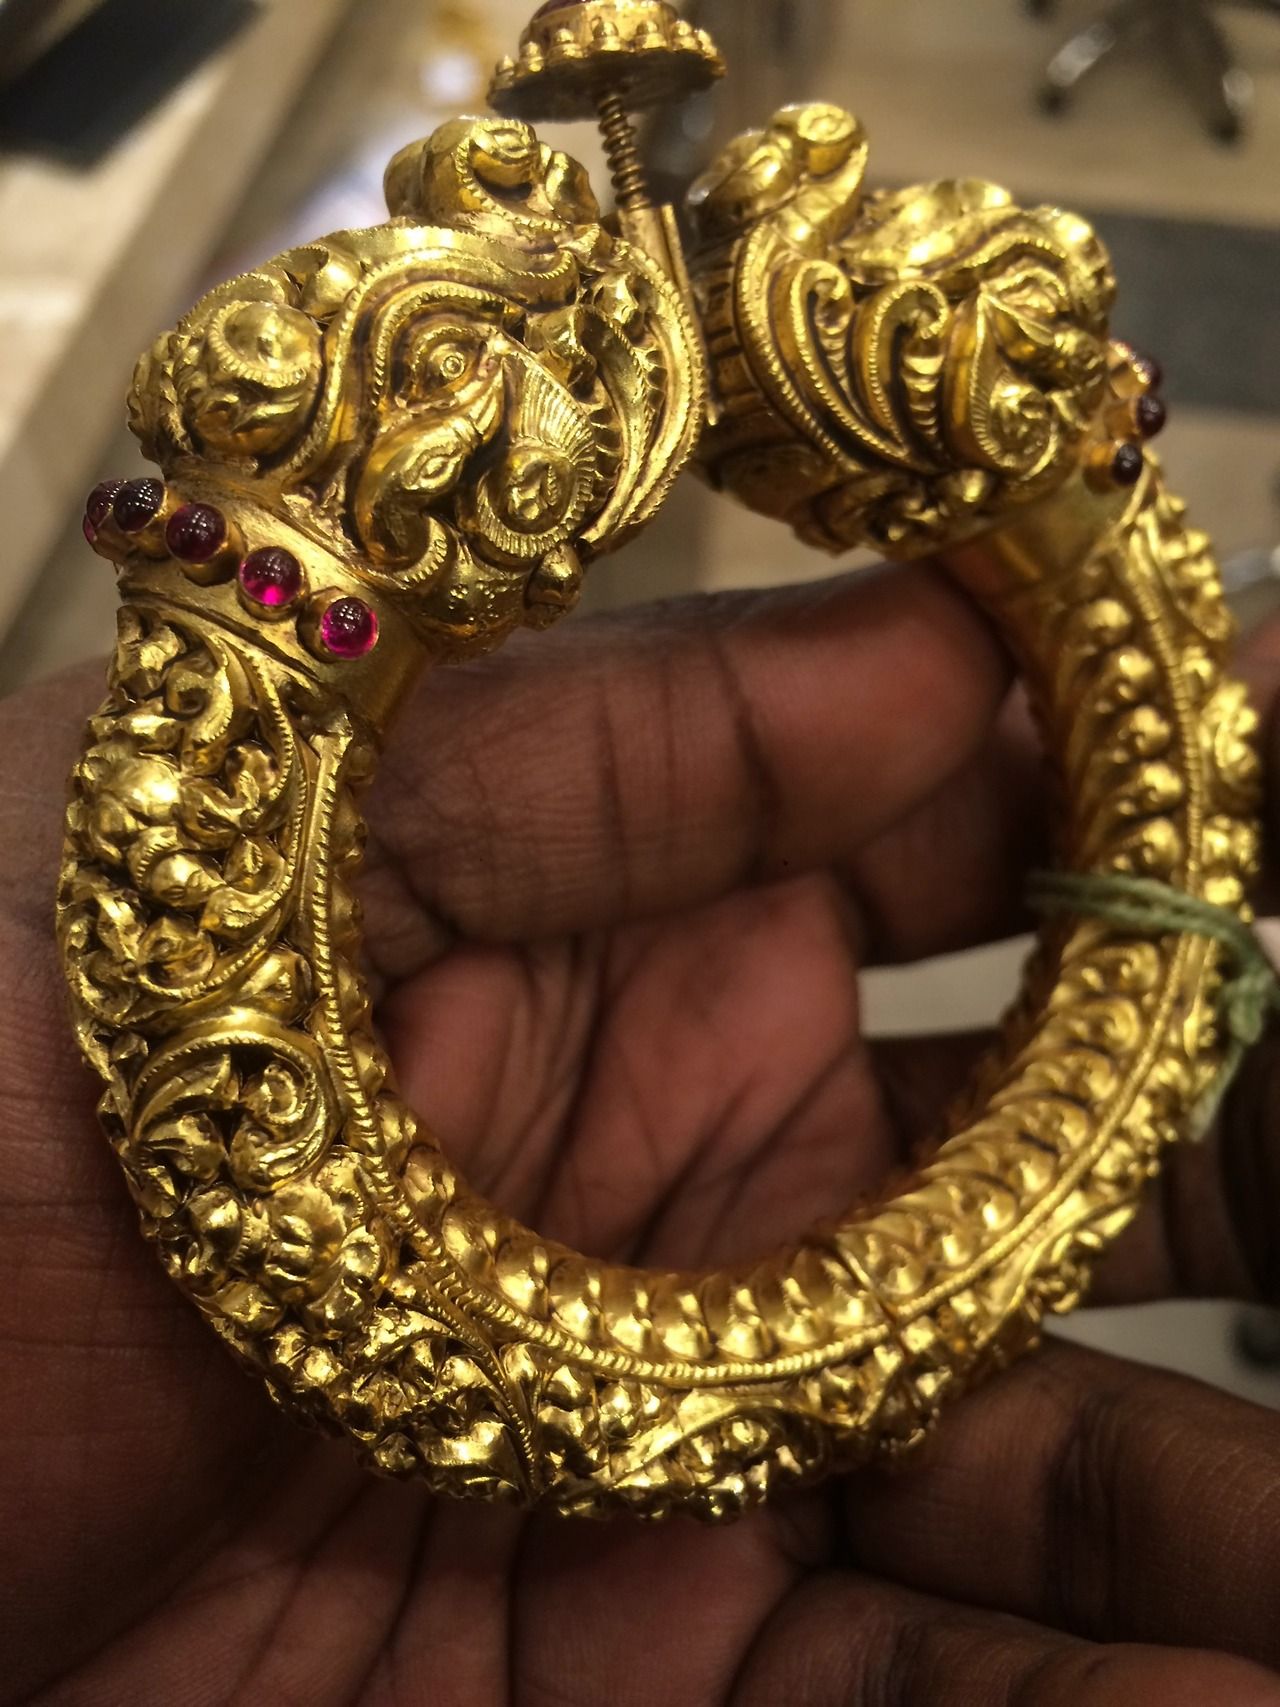 Golden bangle | jewelry | Pinterest | Bangle, Indian jewelry and ...